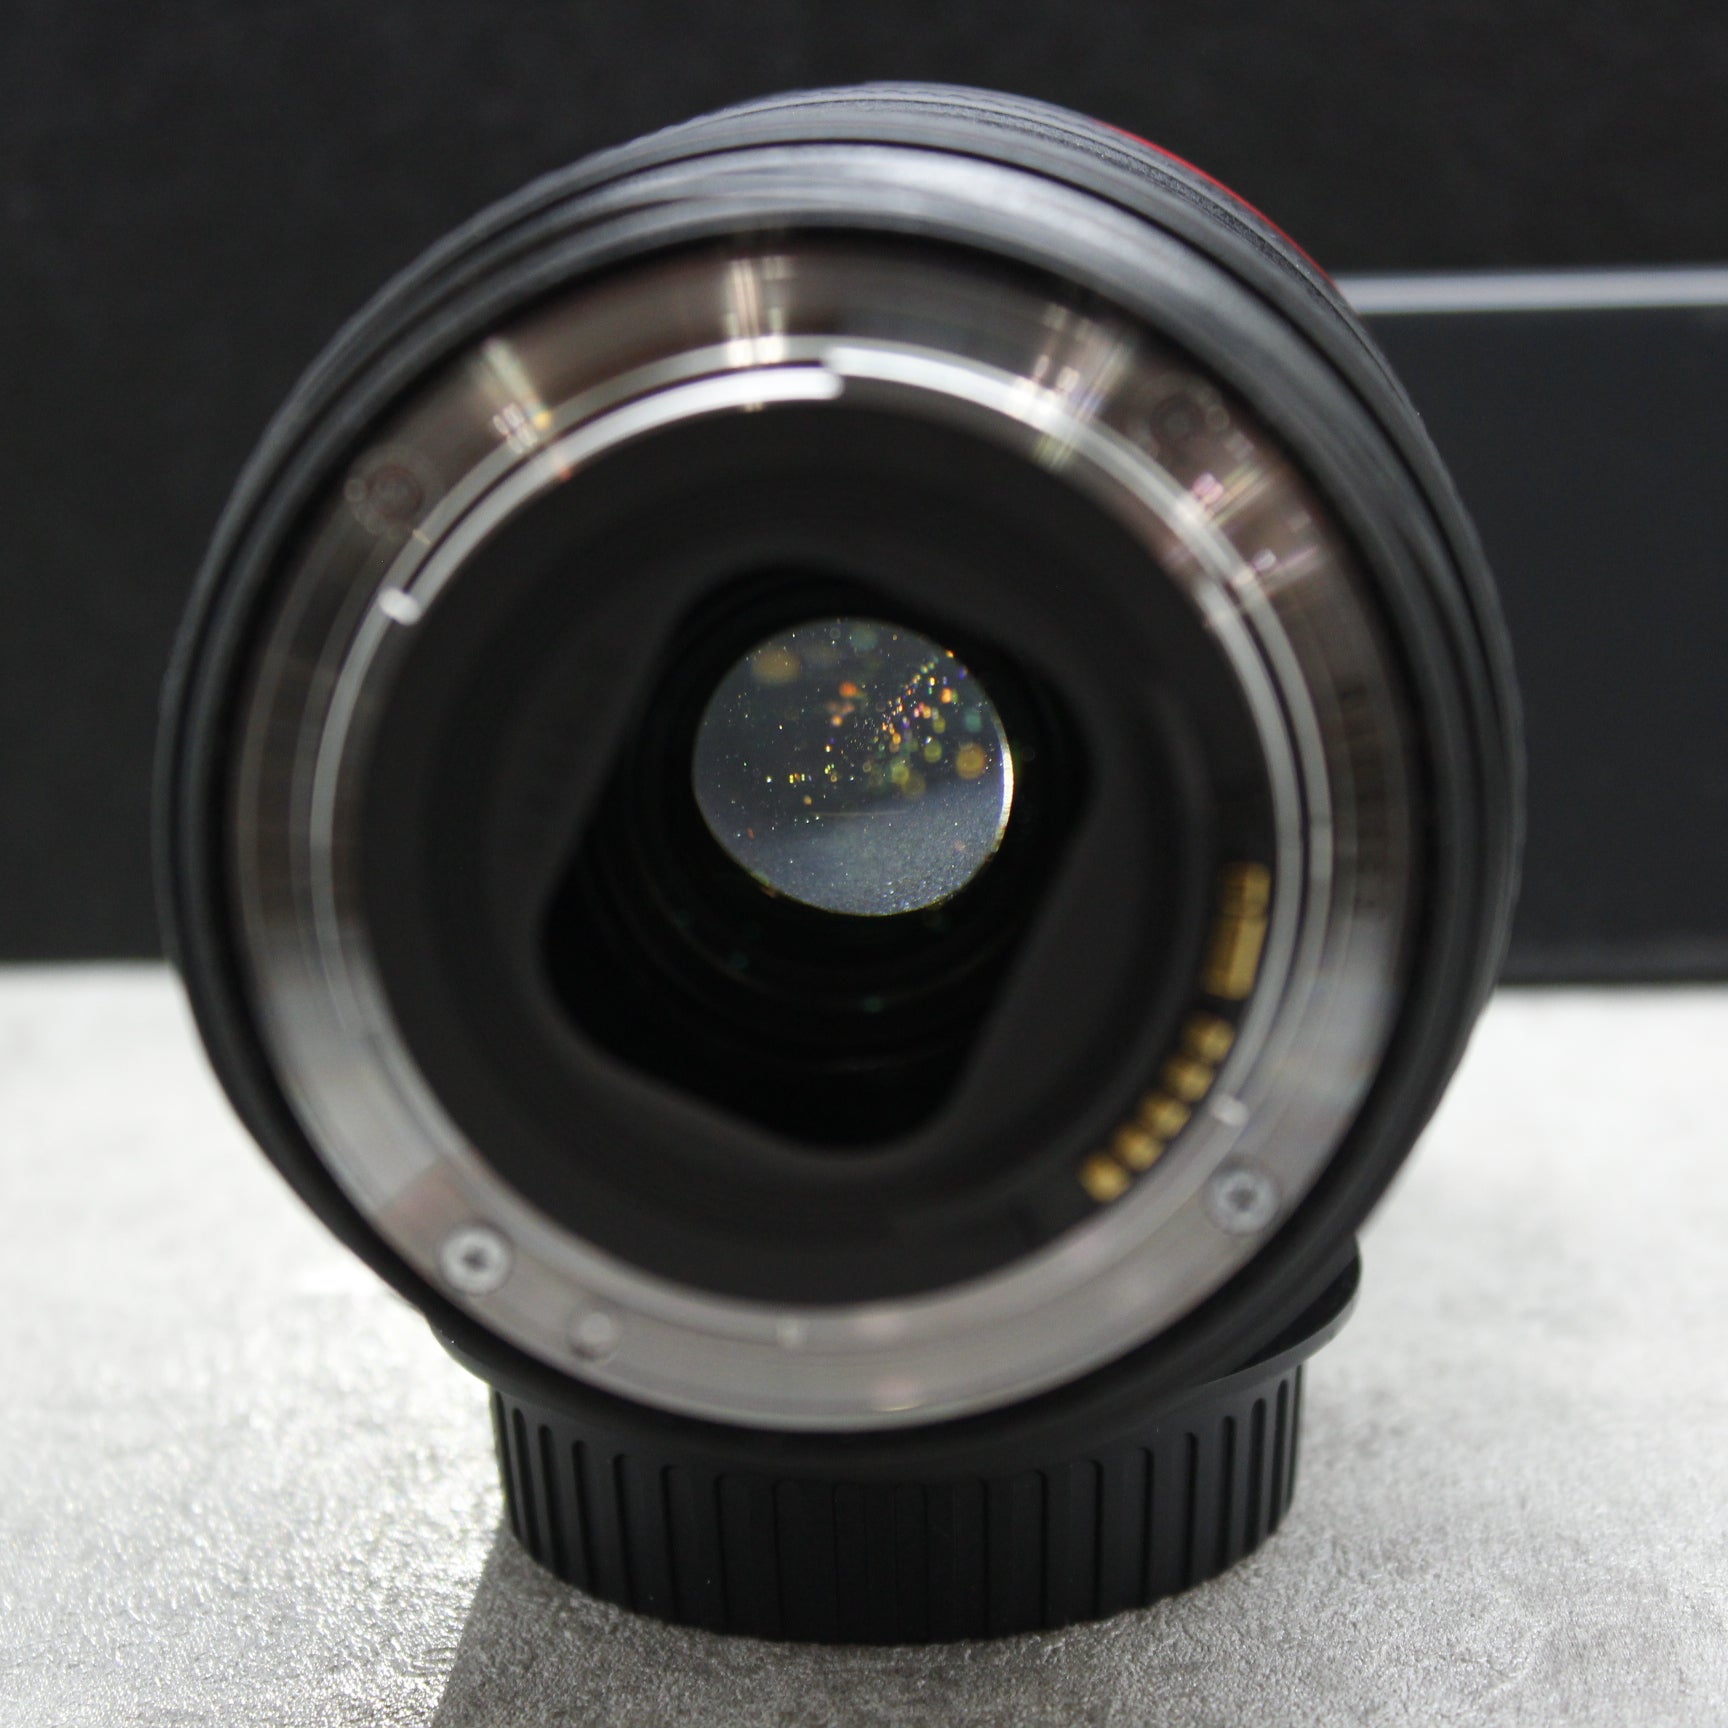 中古品 Canon EF24-105mm F4L IS USM ※1月8日(日)のYouTube生配信でご紹介